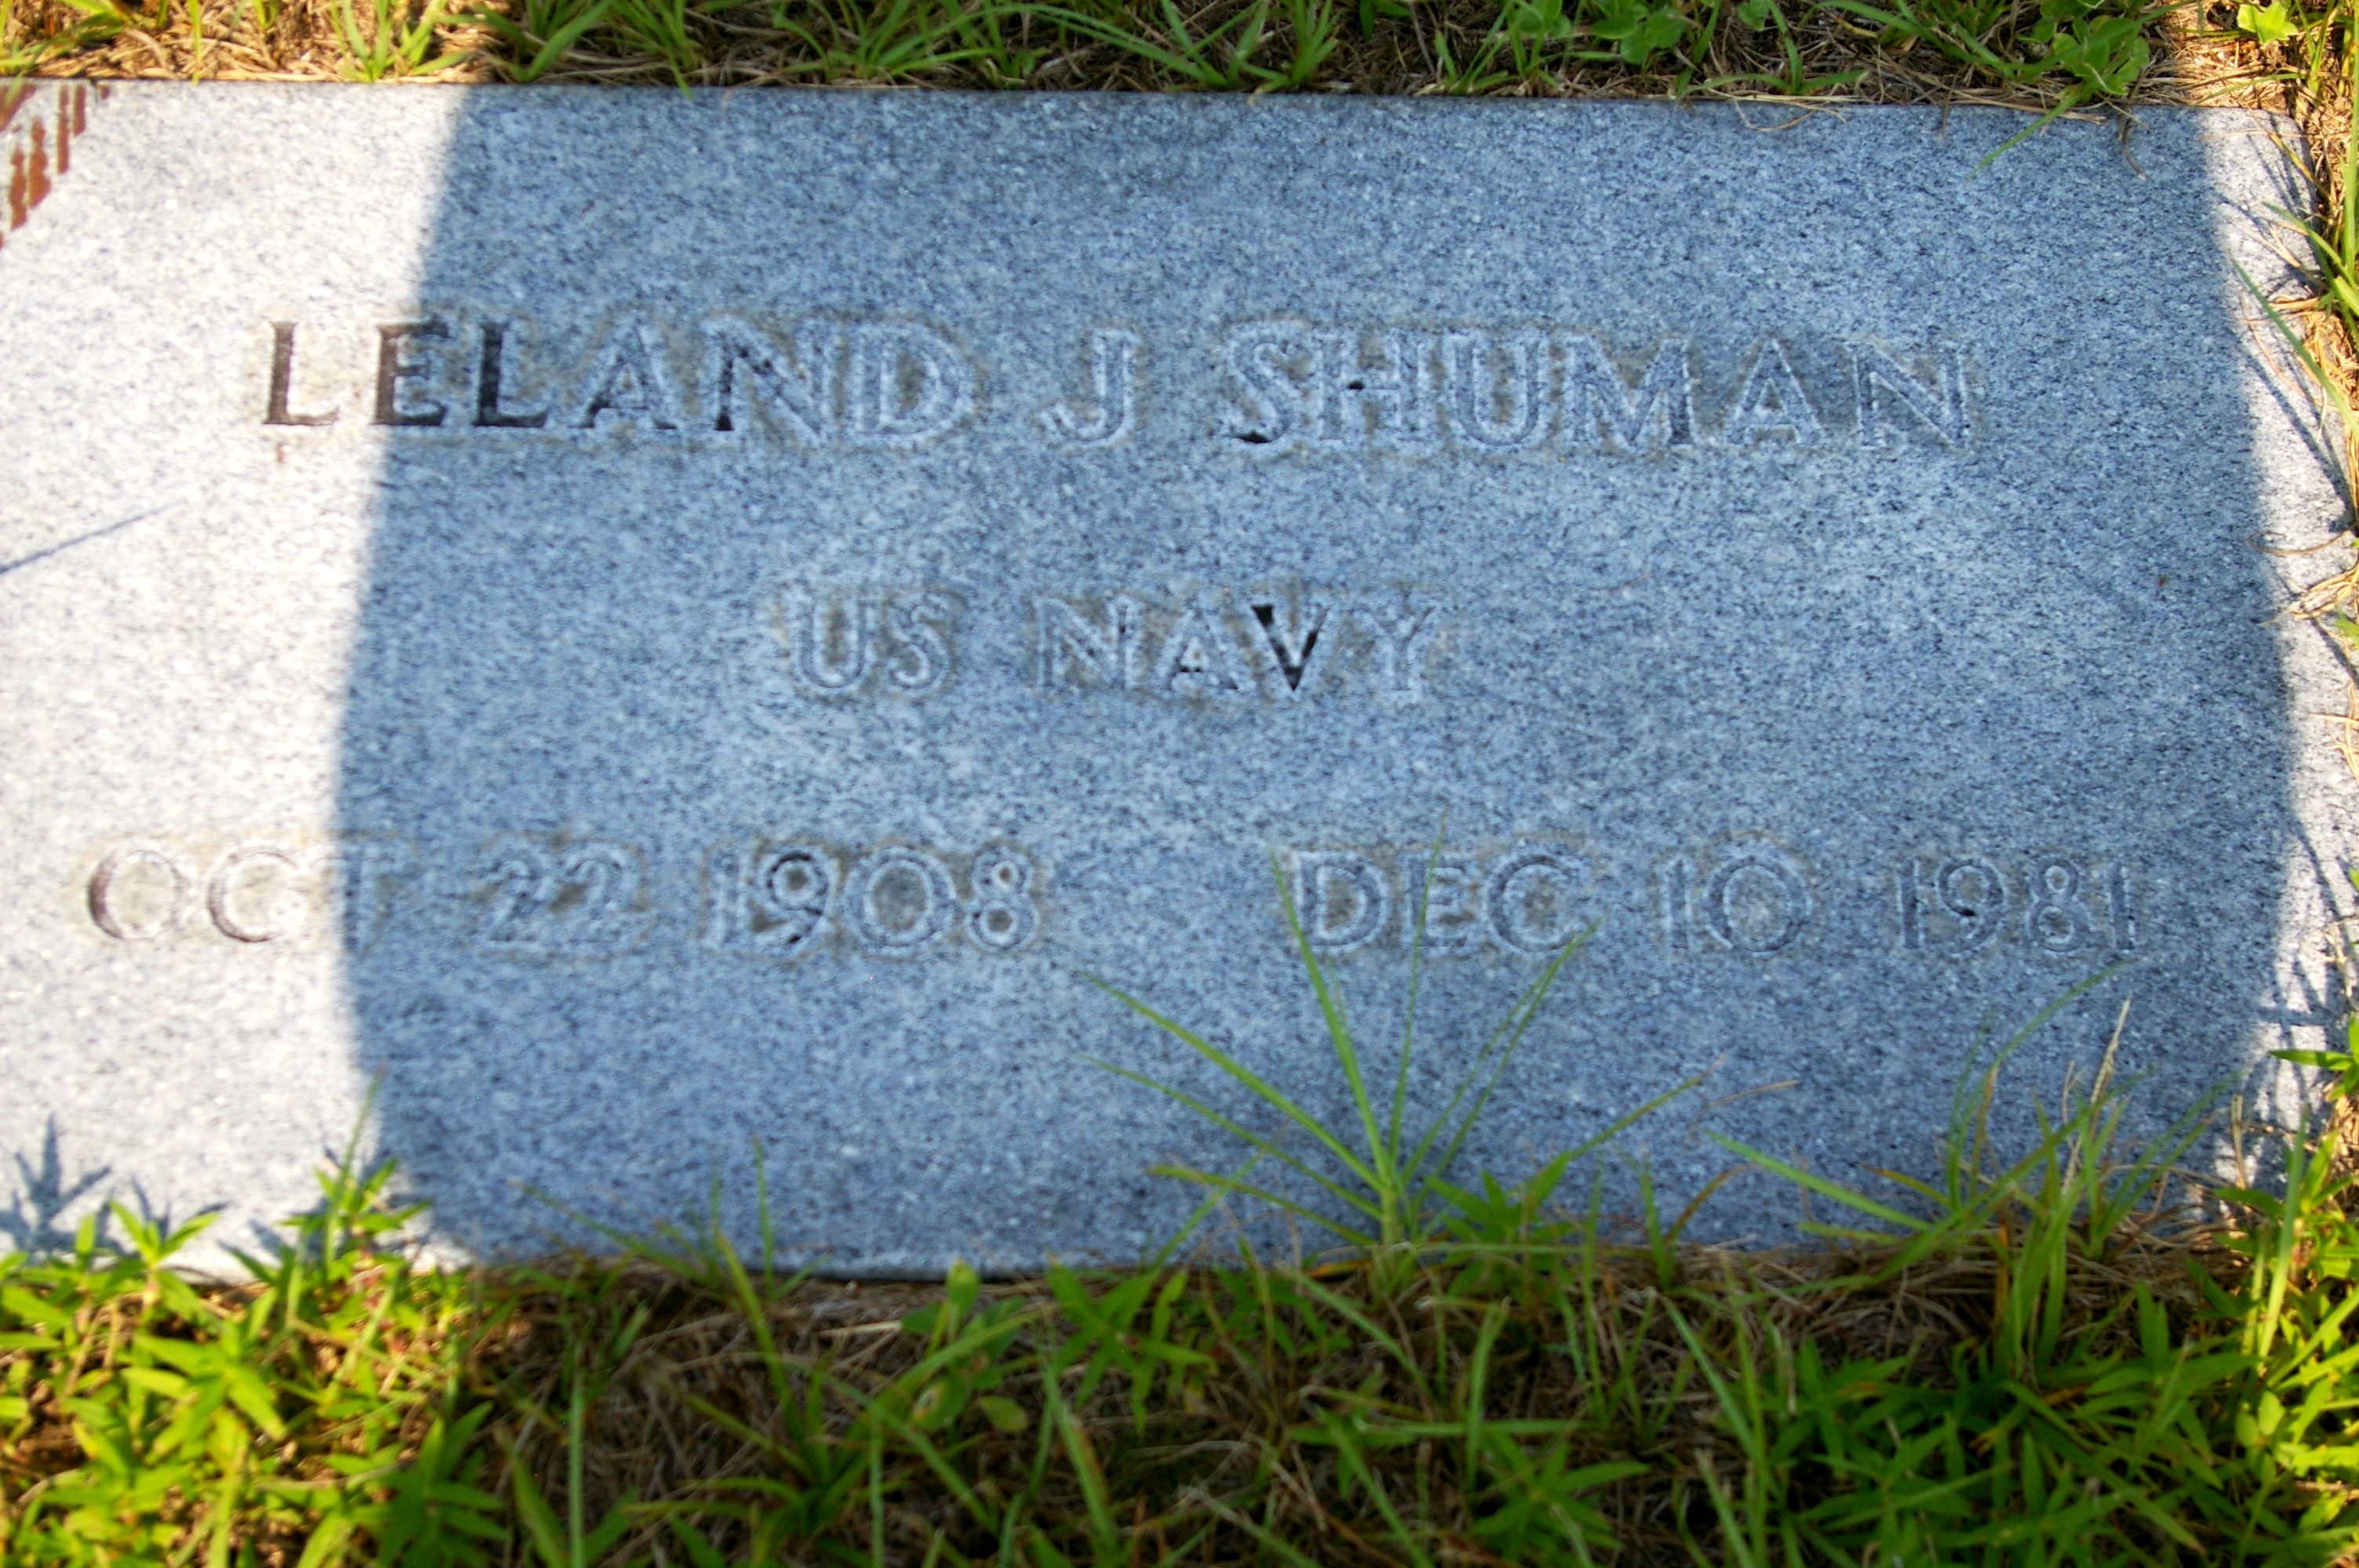 Leland J. Shuman